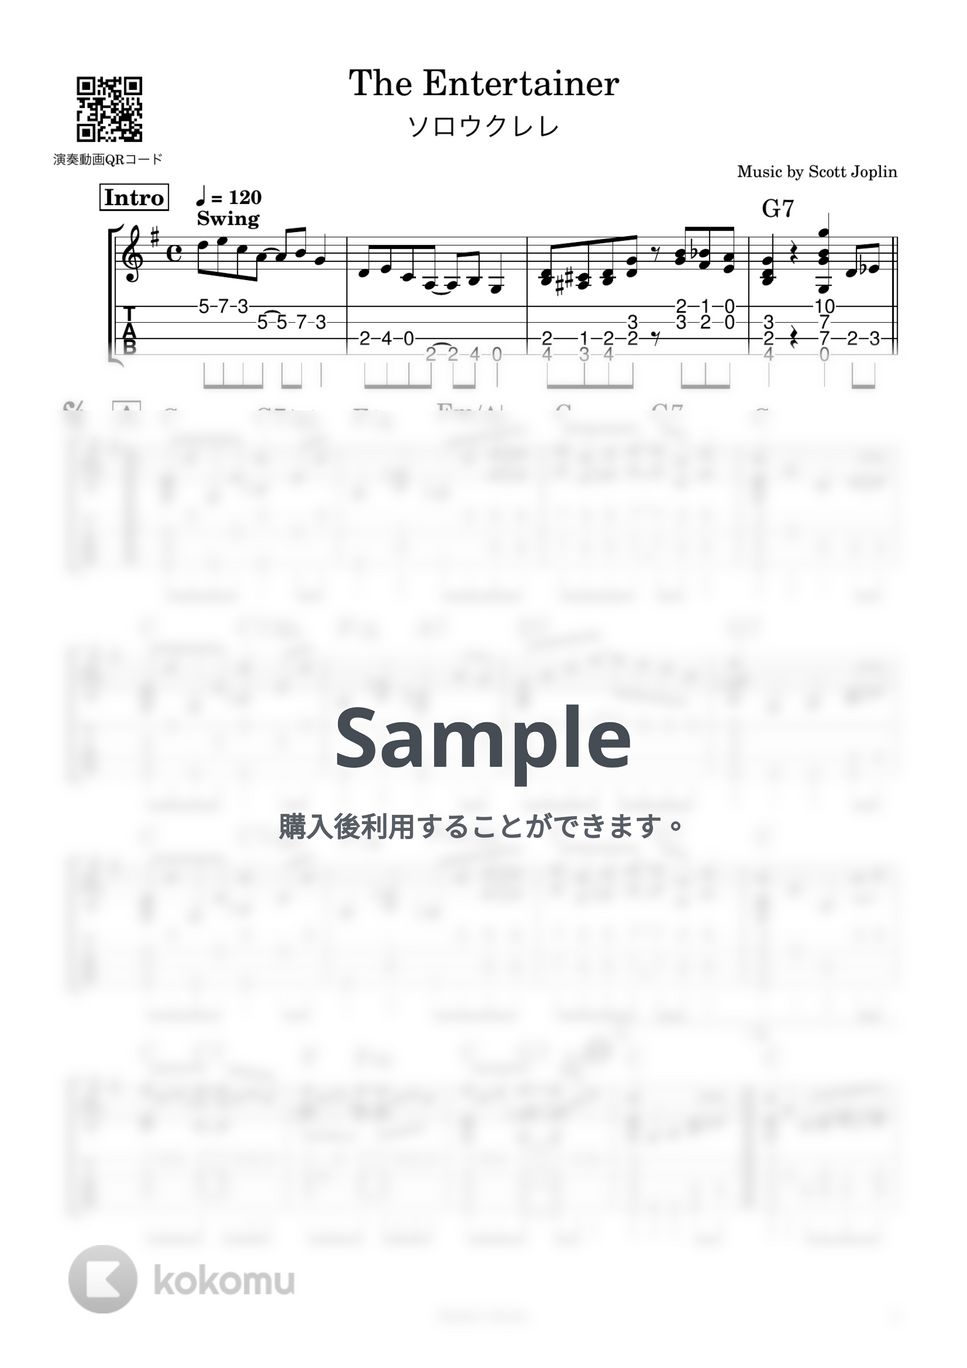 Scott Joplin - The Entertainer【ソロウクレレ】 (ソロウクレレ) by Sinho